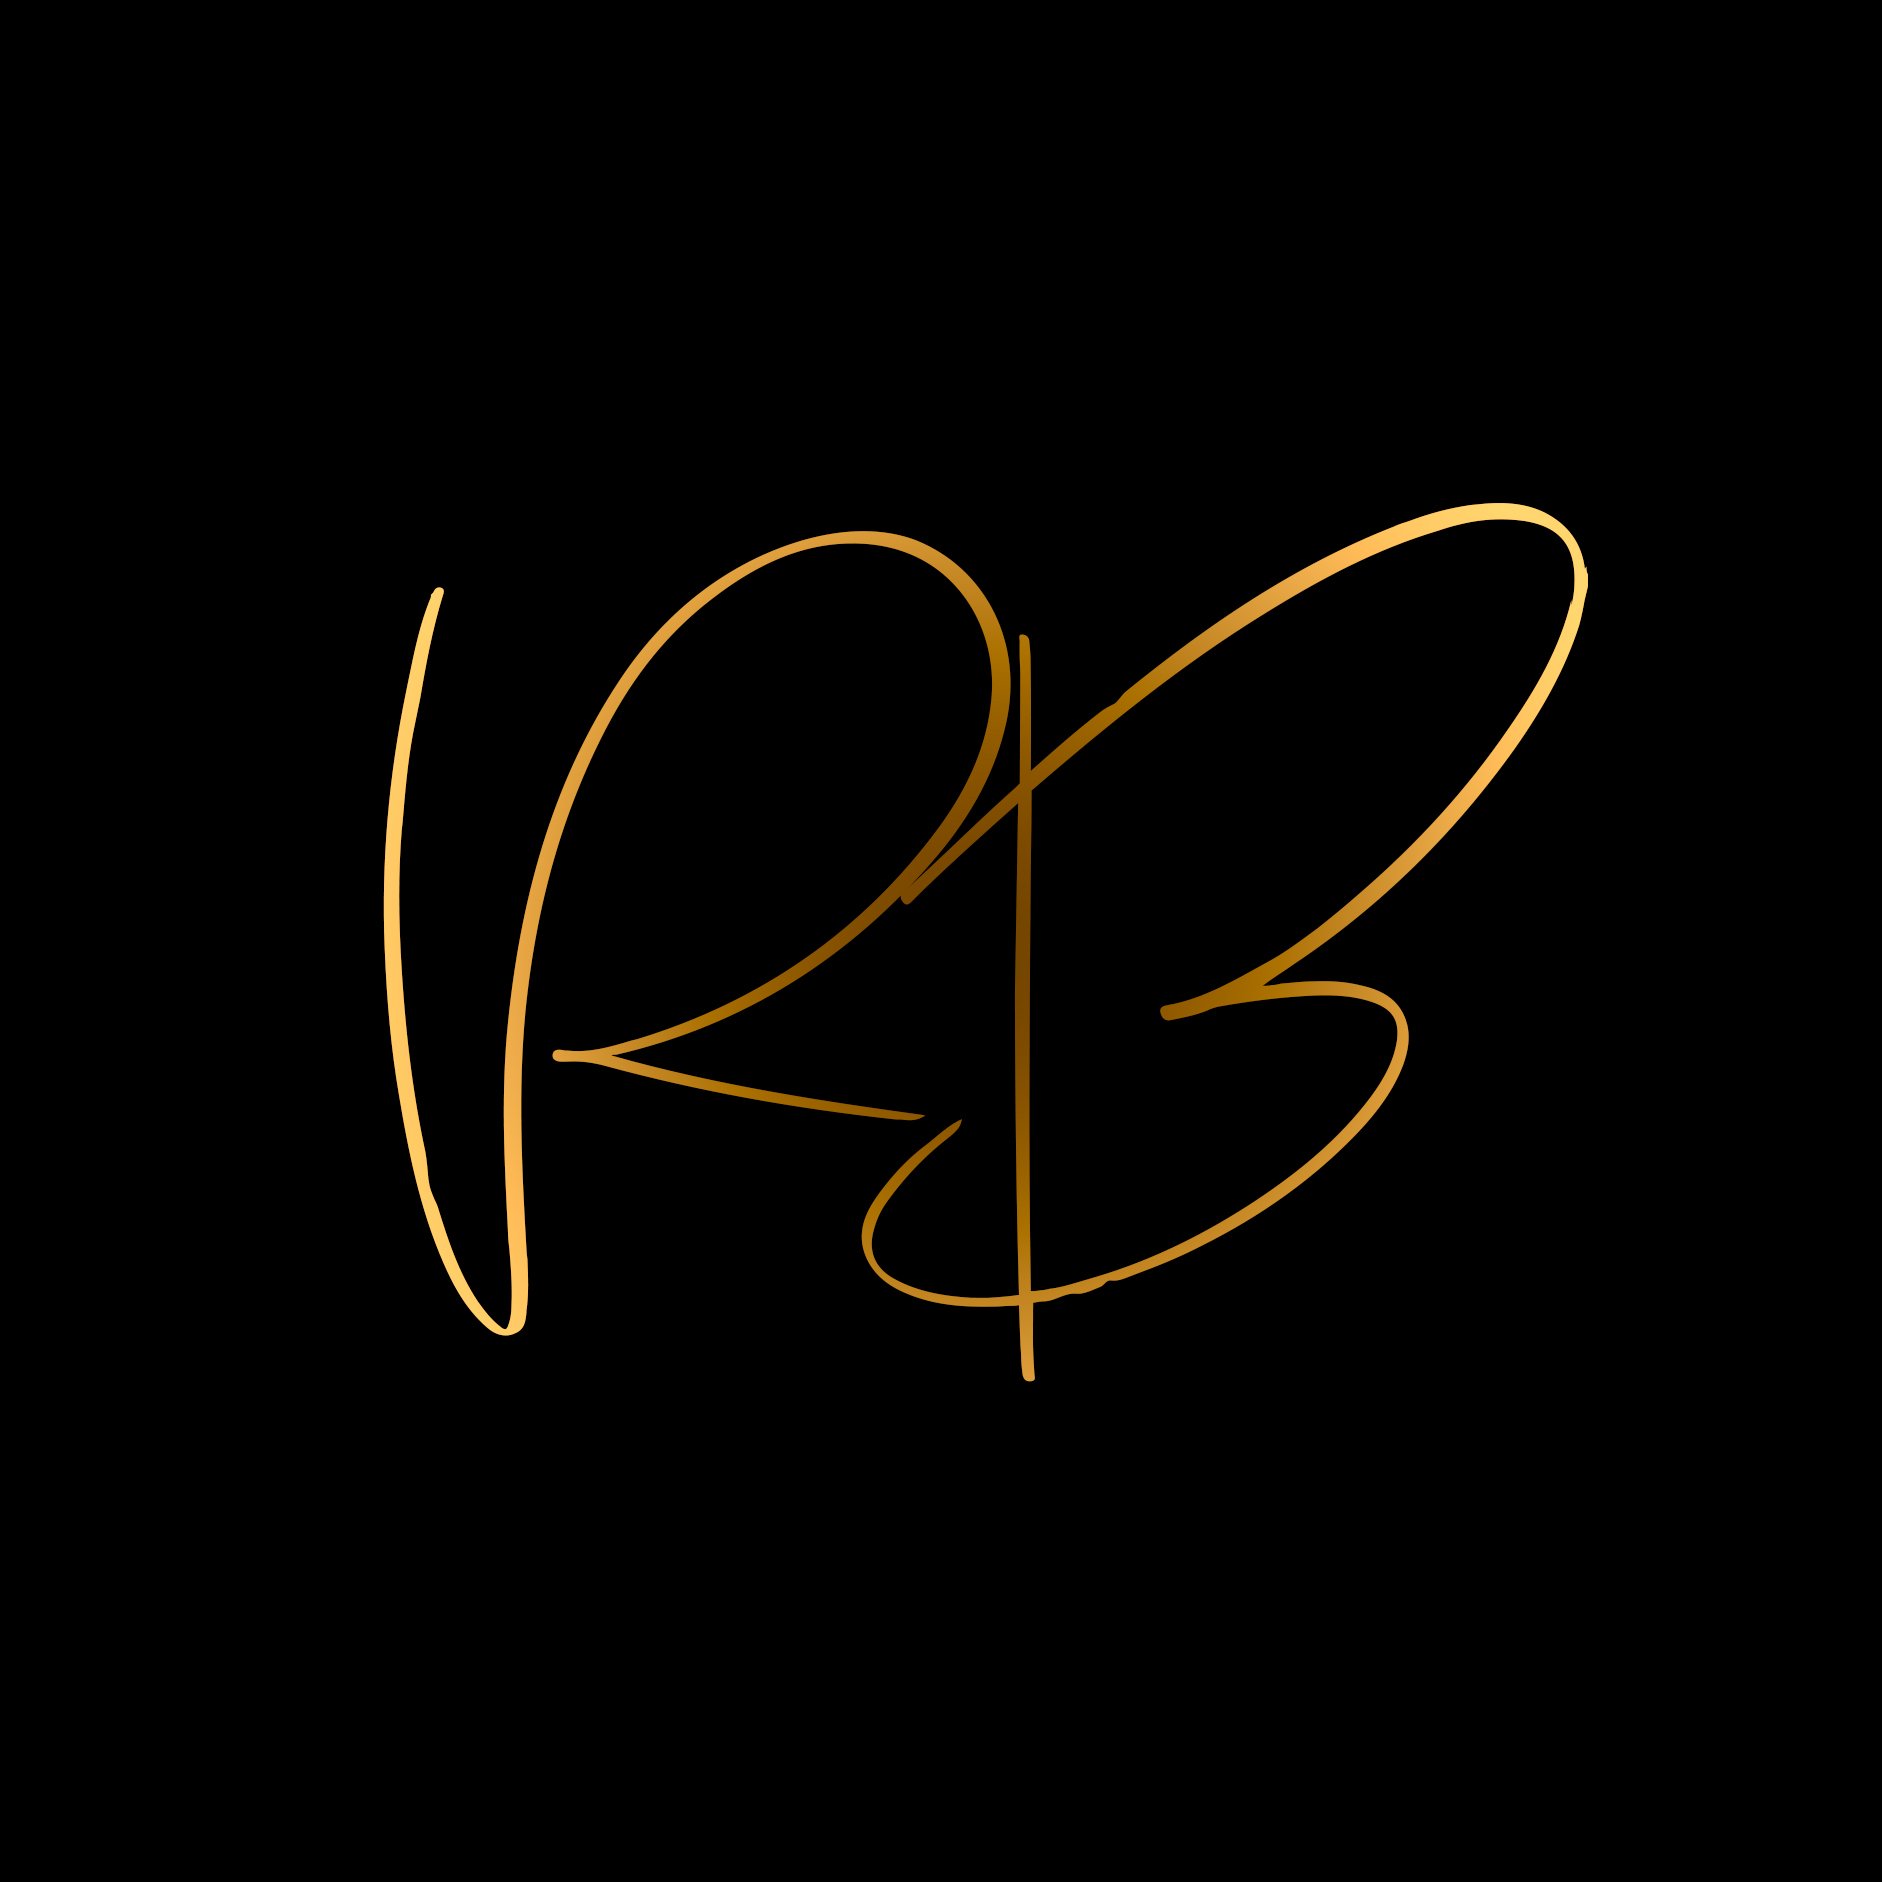 logo rb romain Bebon photographe en doré majuscule